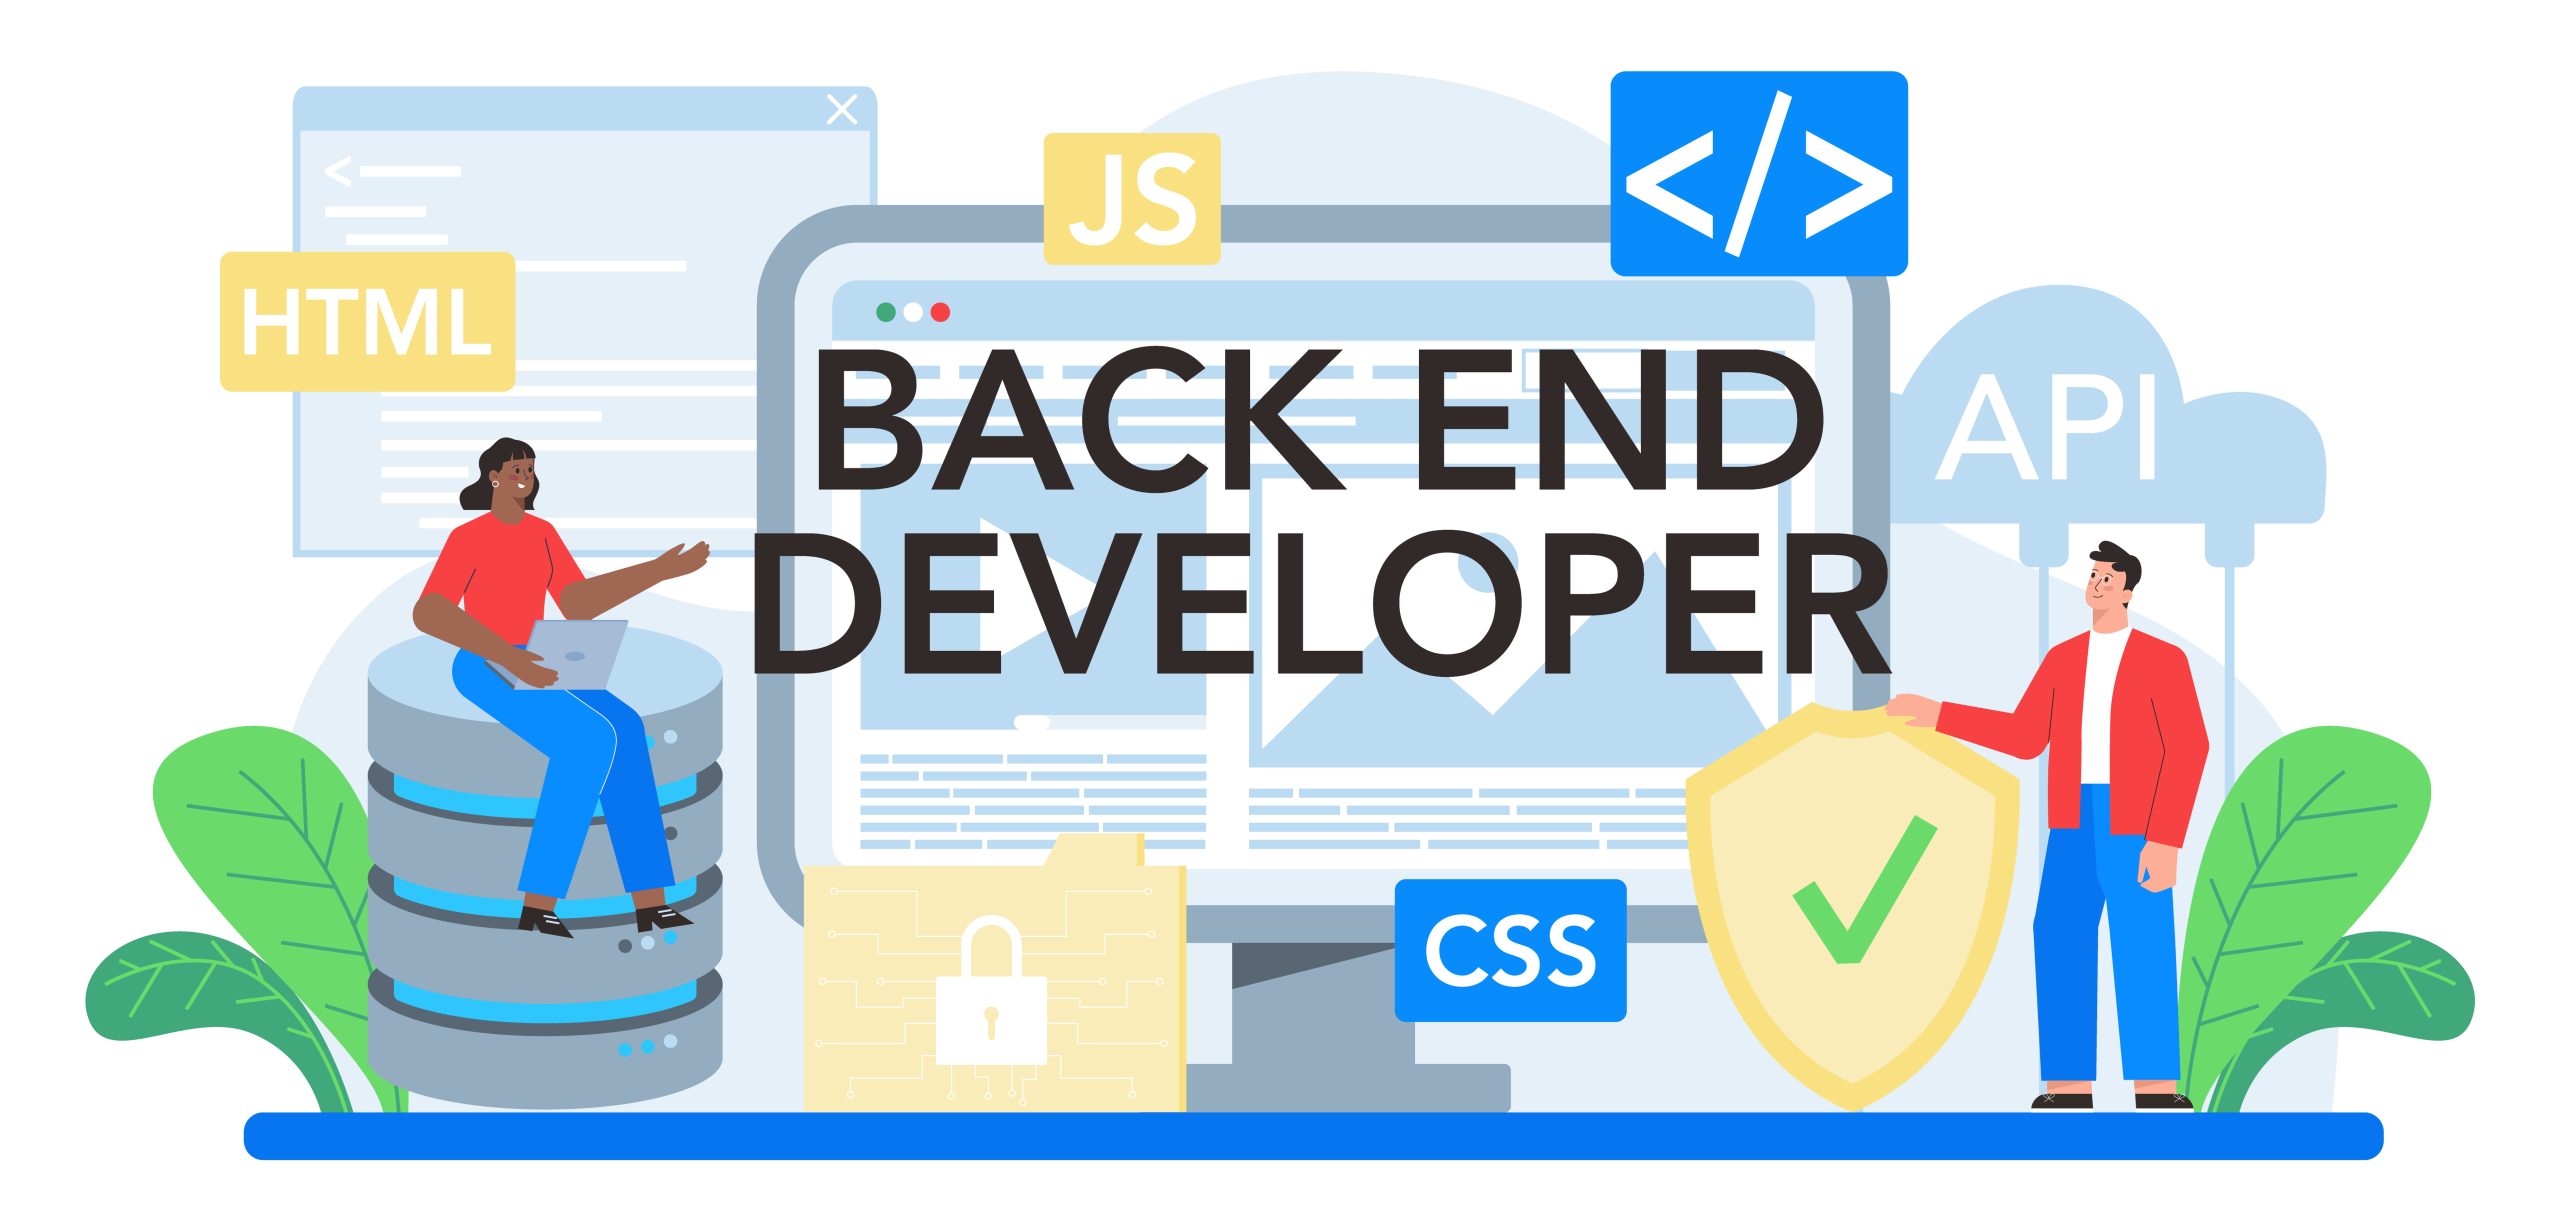 Backend Web Development Benefits